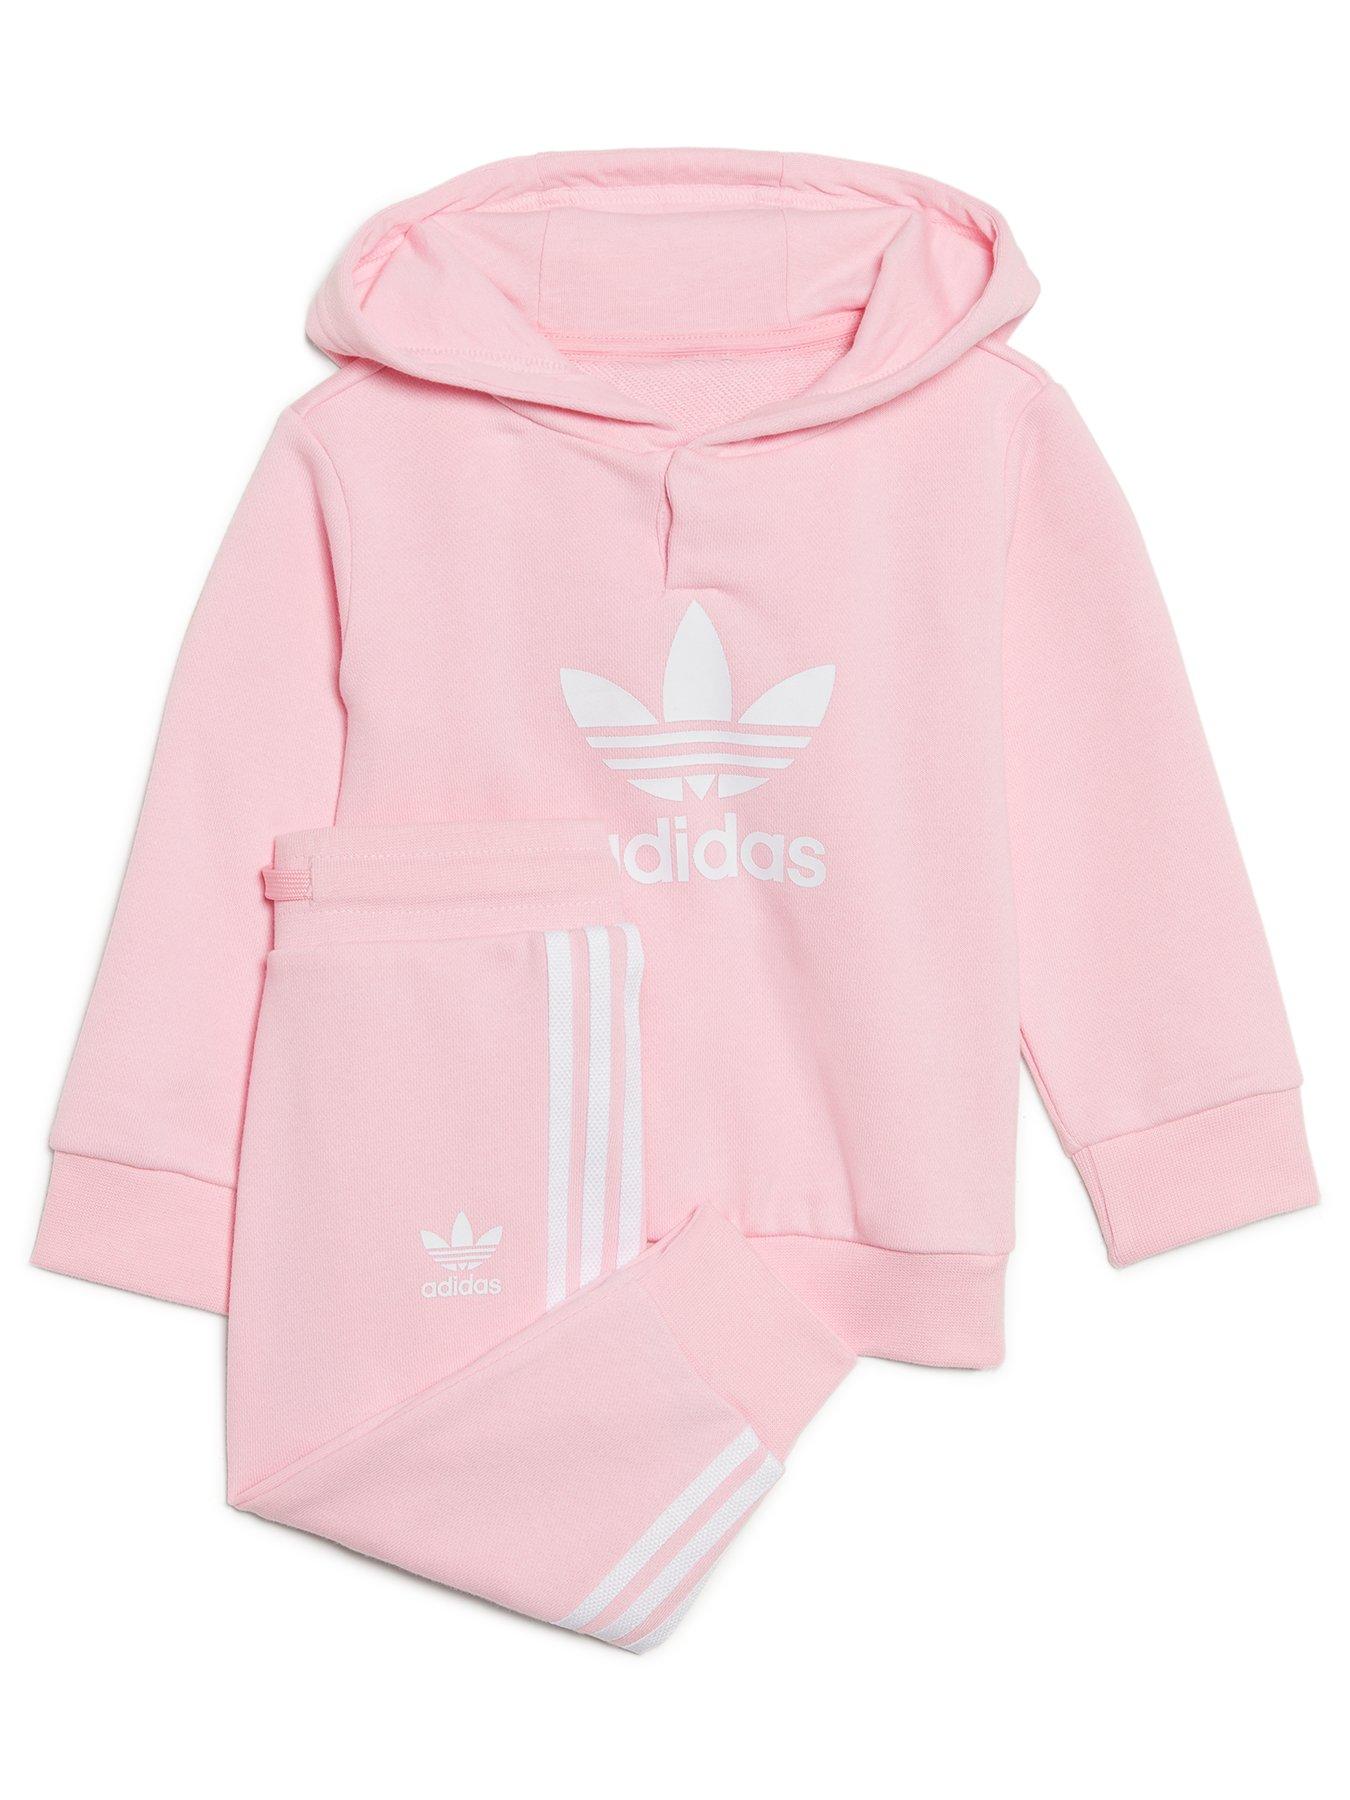 Kids Infant Unisex Hood & Pant Set - Pink/White